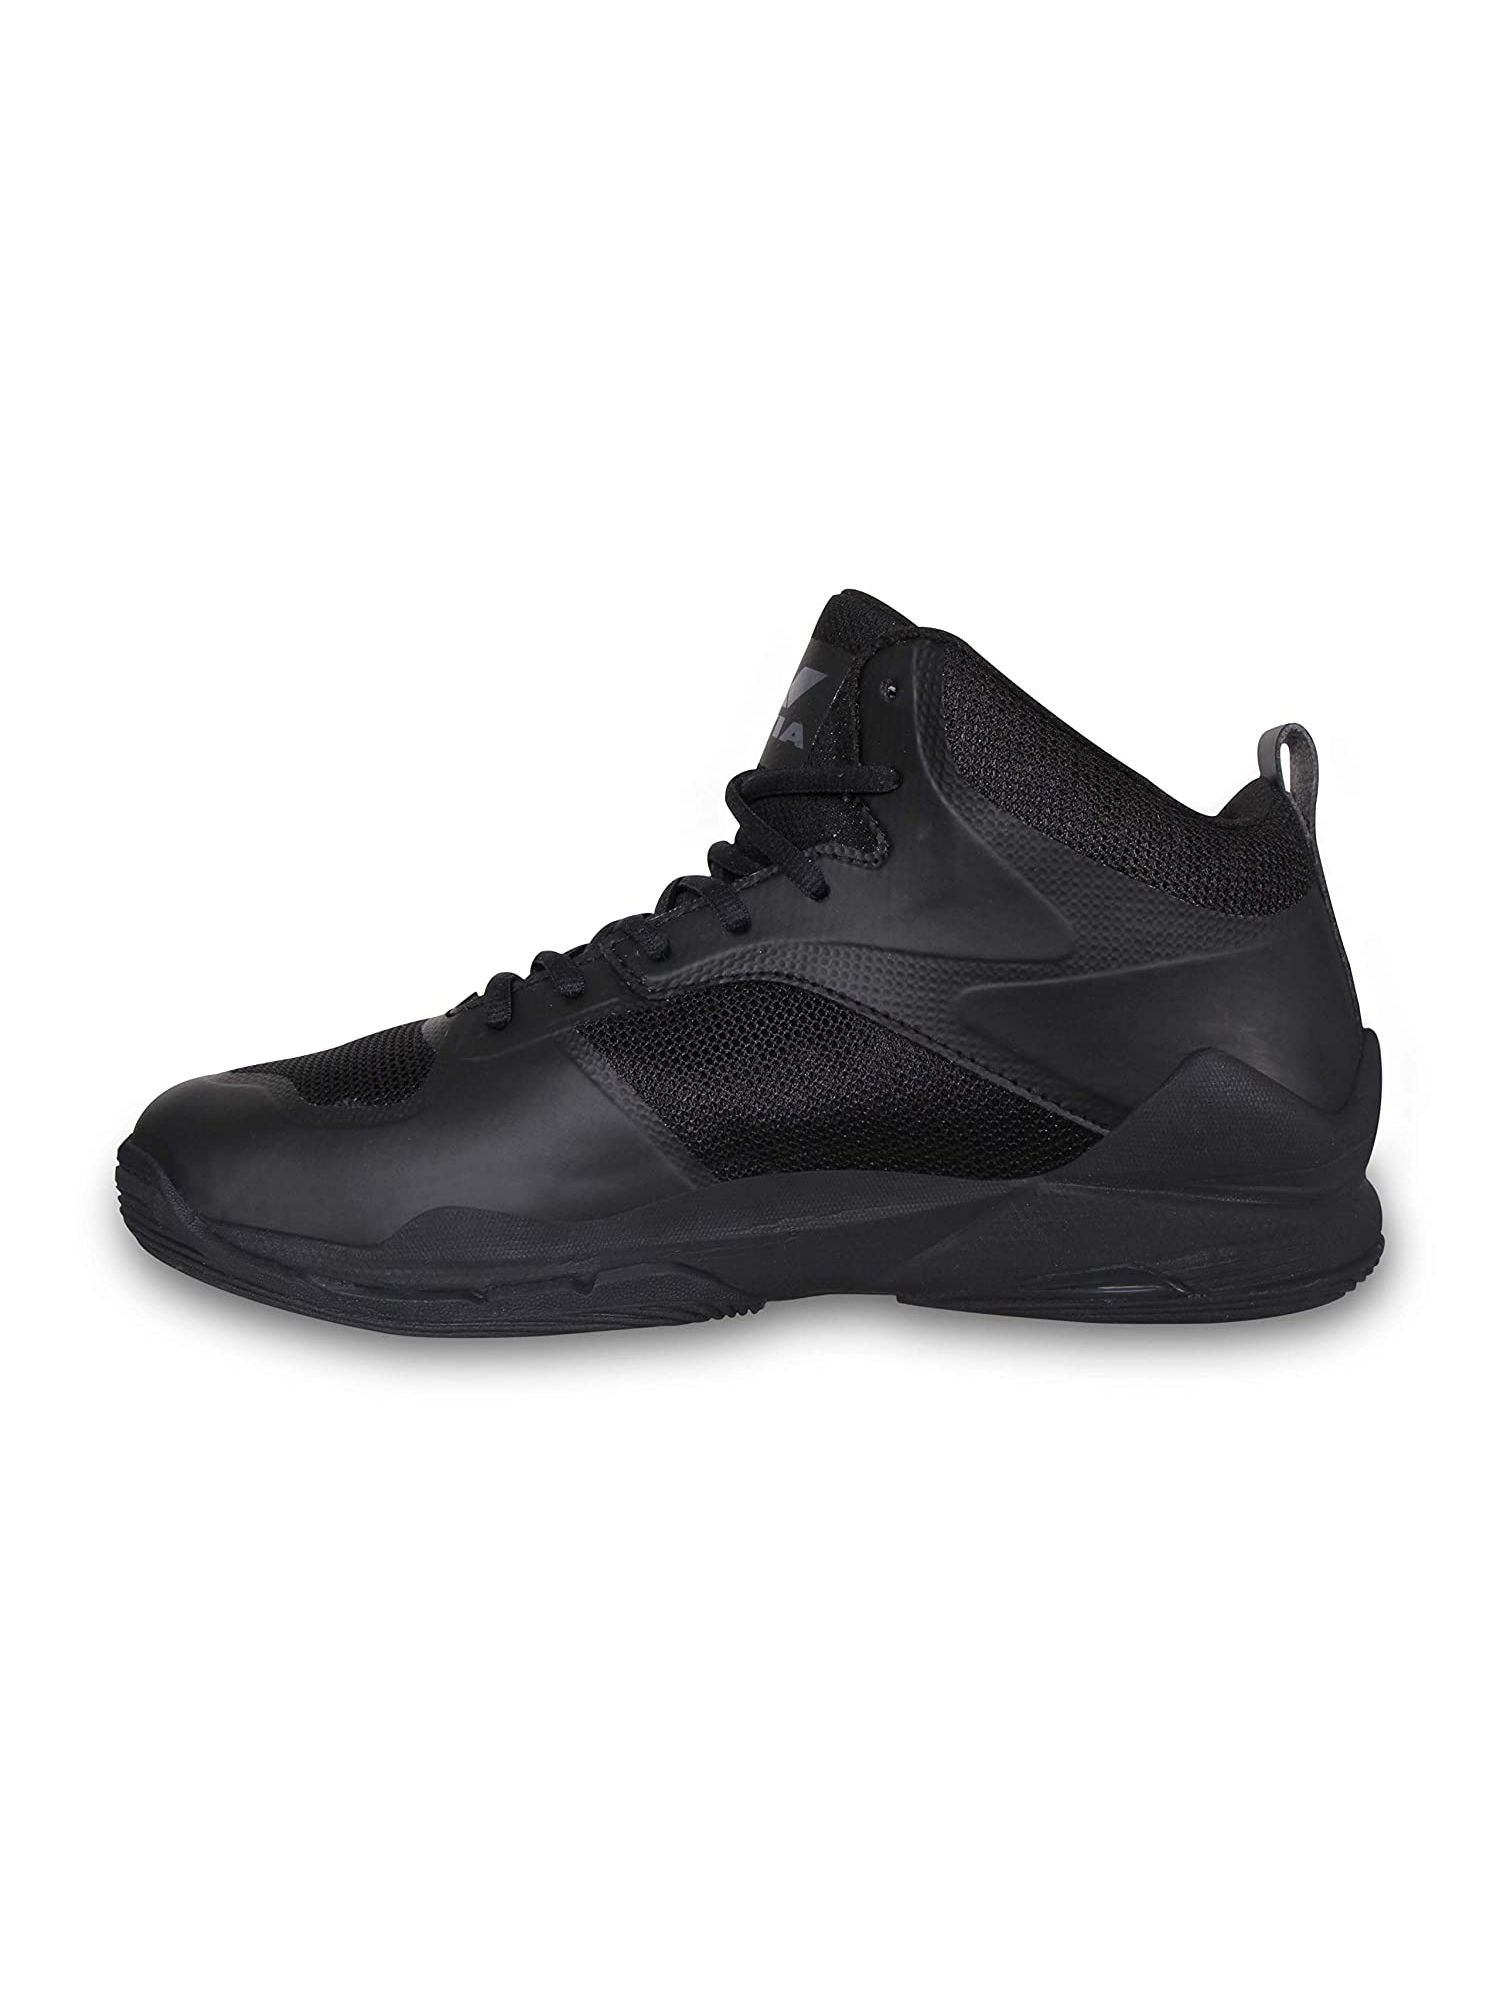 Nivia Combat 2.0 Basketball Shoes for Men: Buy Nivia Combat 2.0 ...